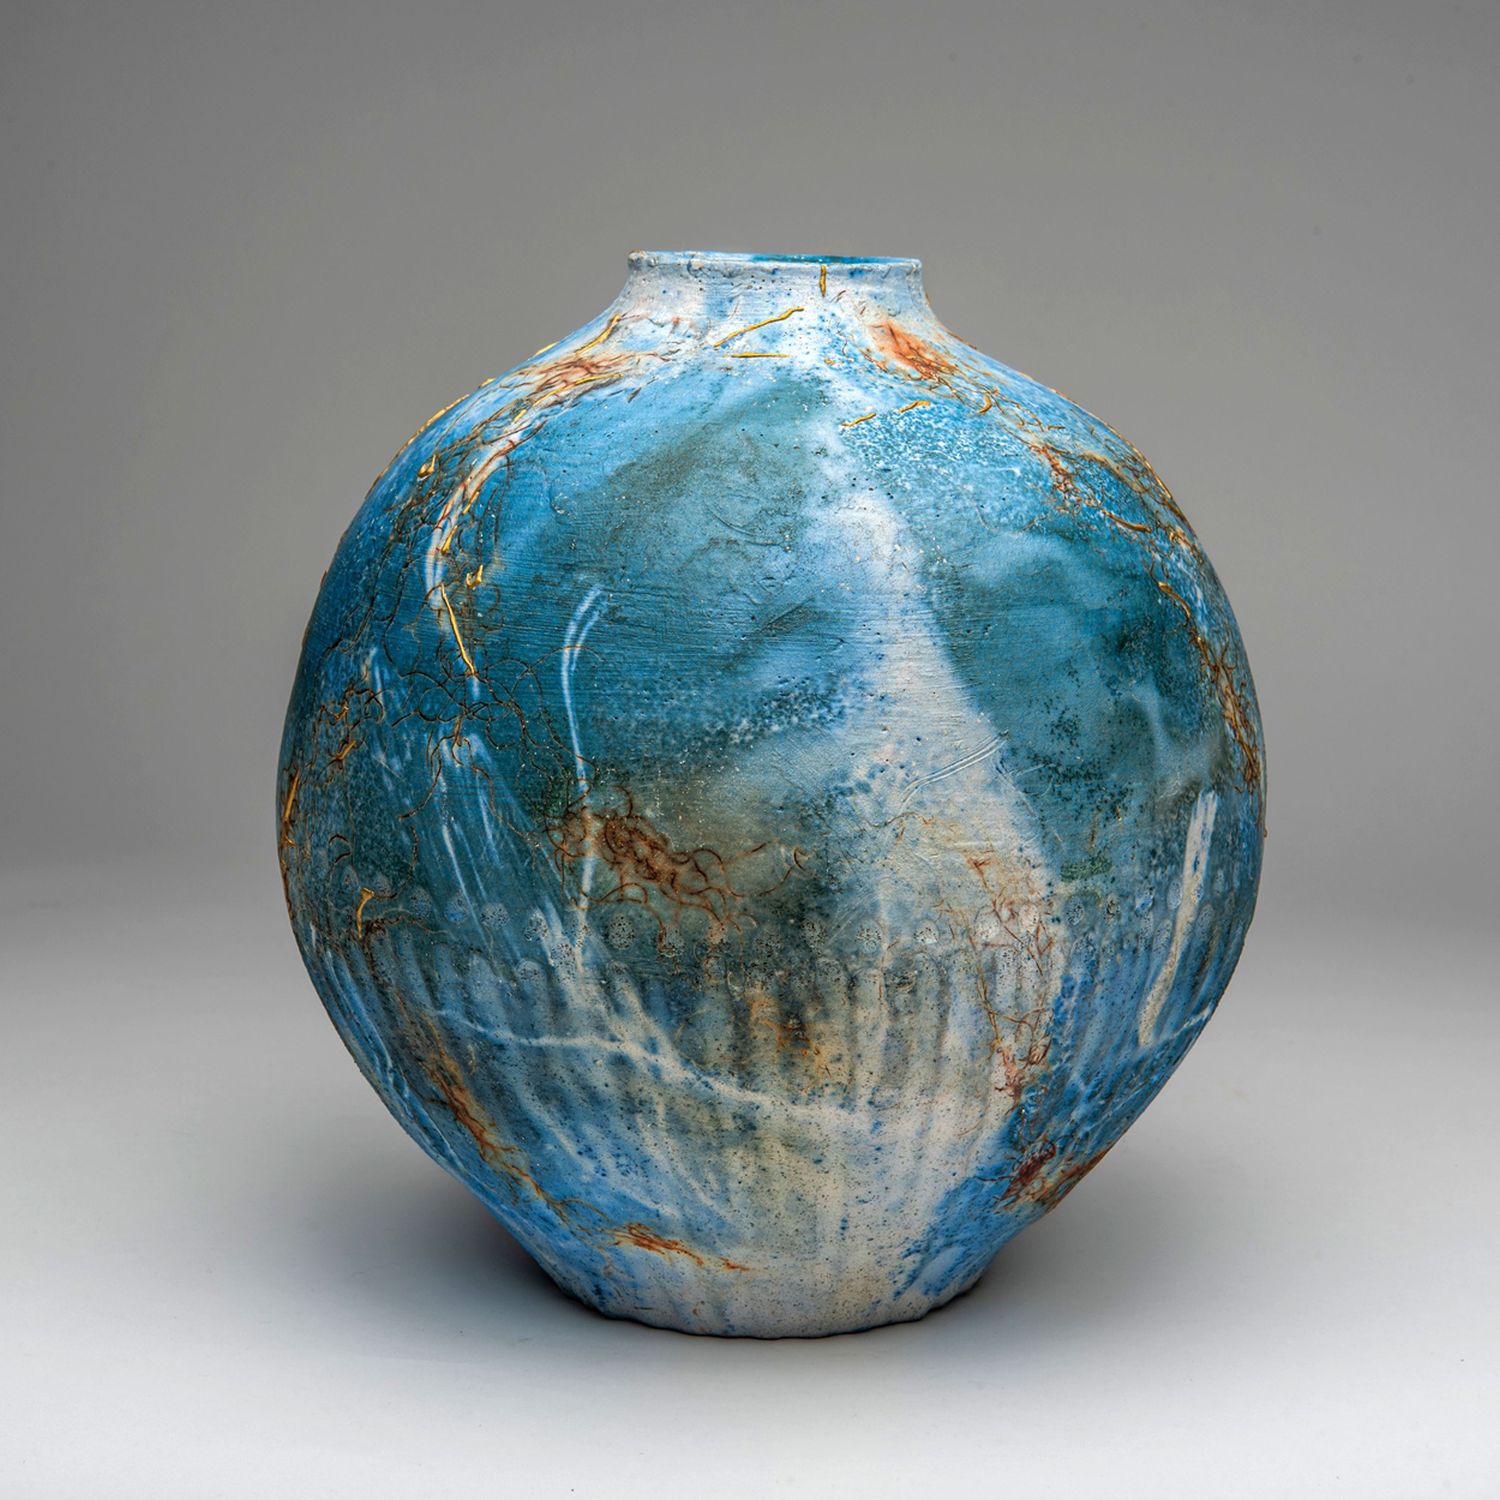 Alison Brannen: Medium Moon Jar Product Image 1 of 1